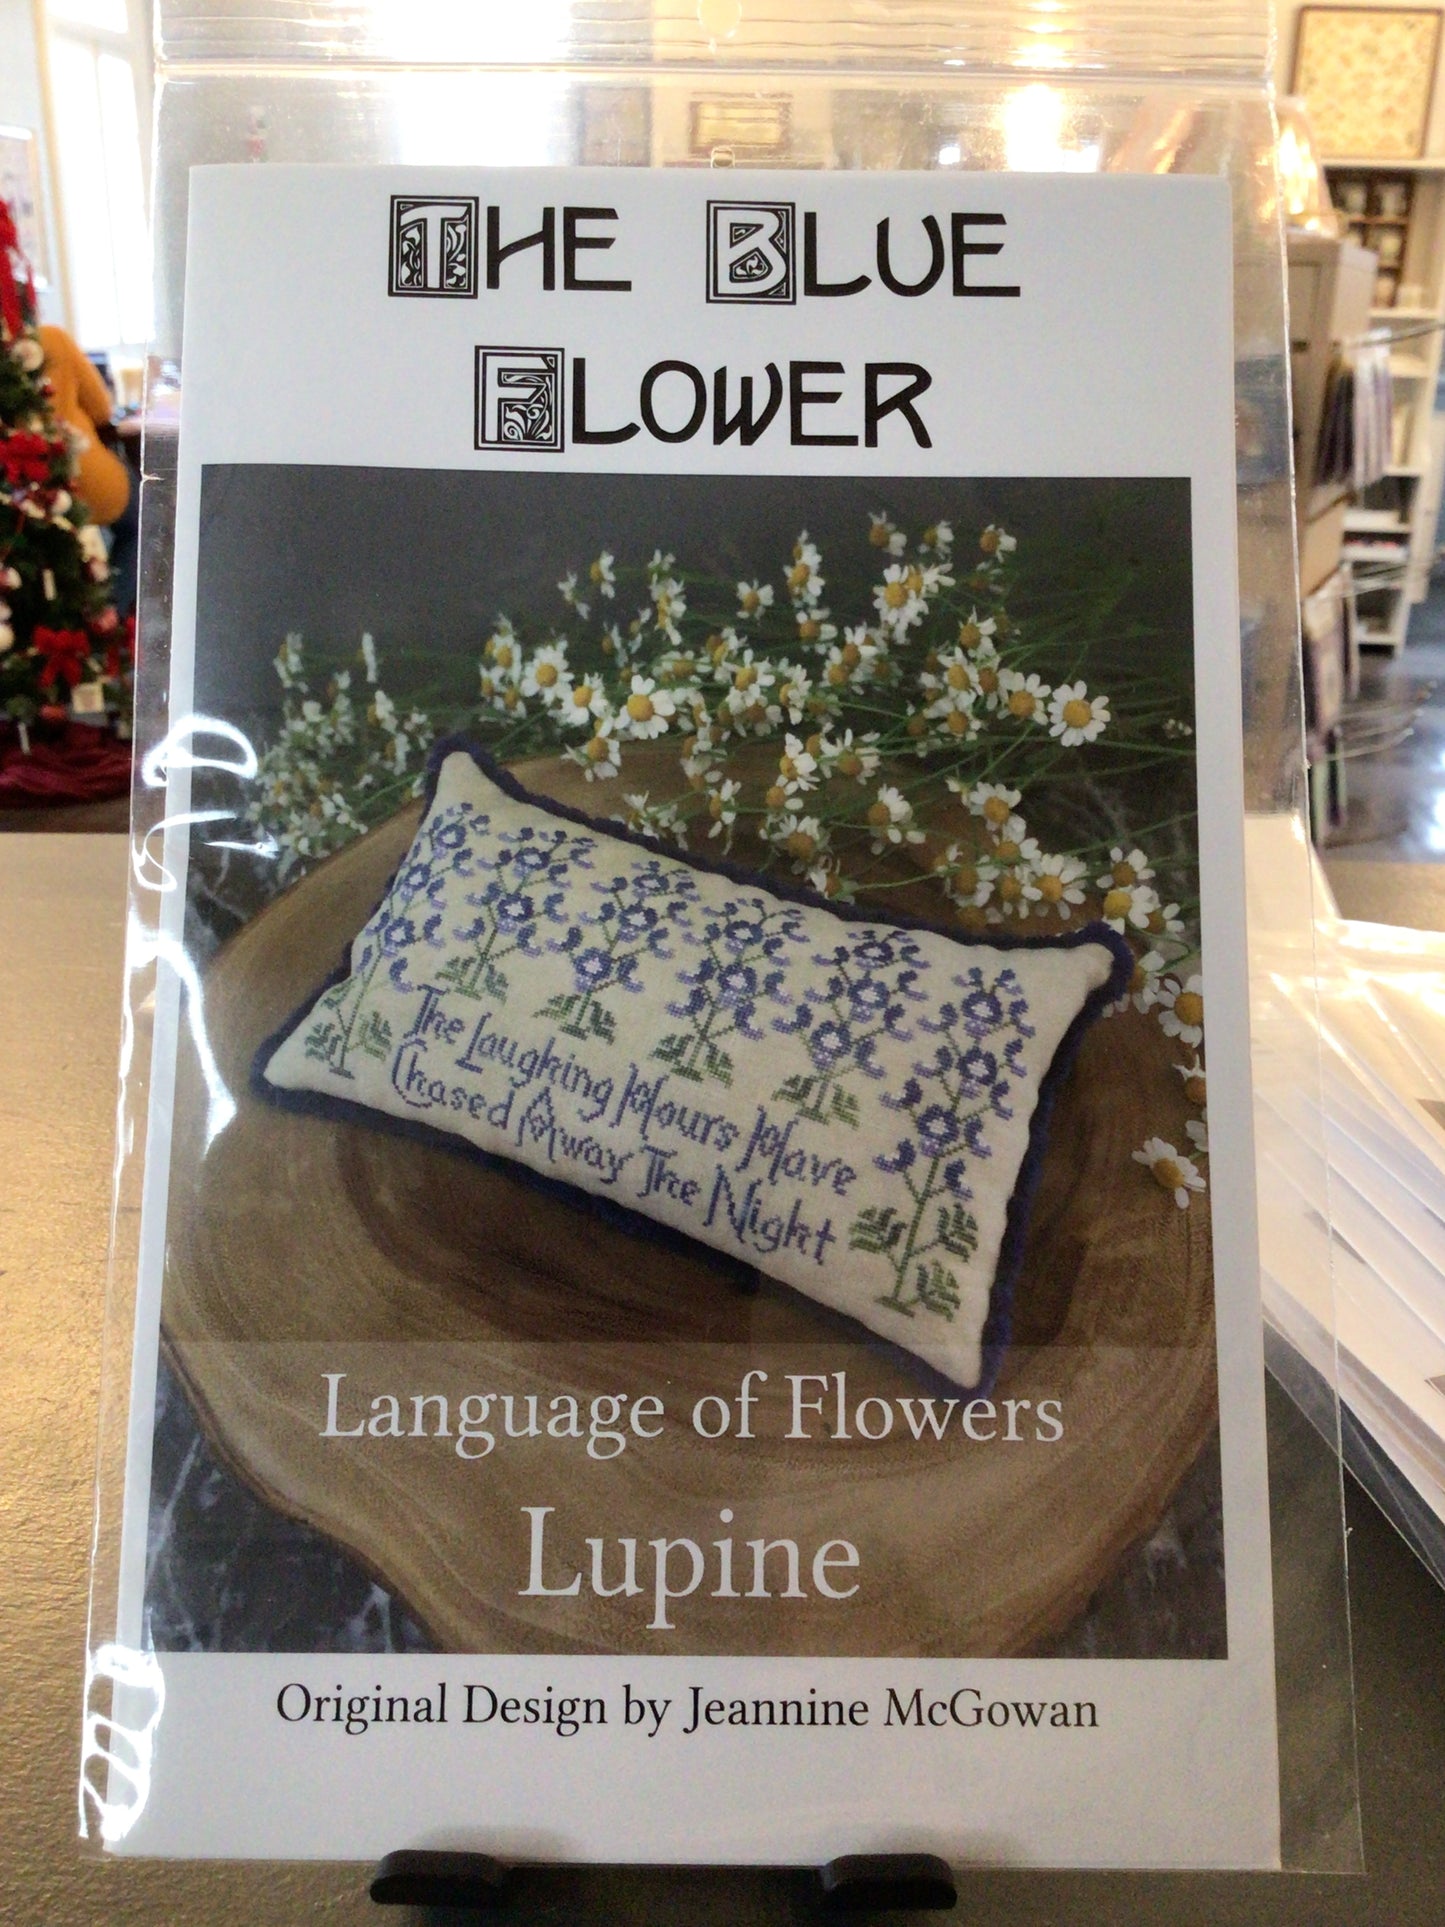 Language of Flowers: Lupine